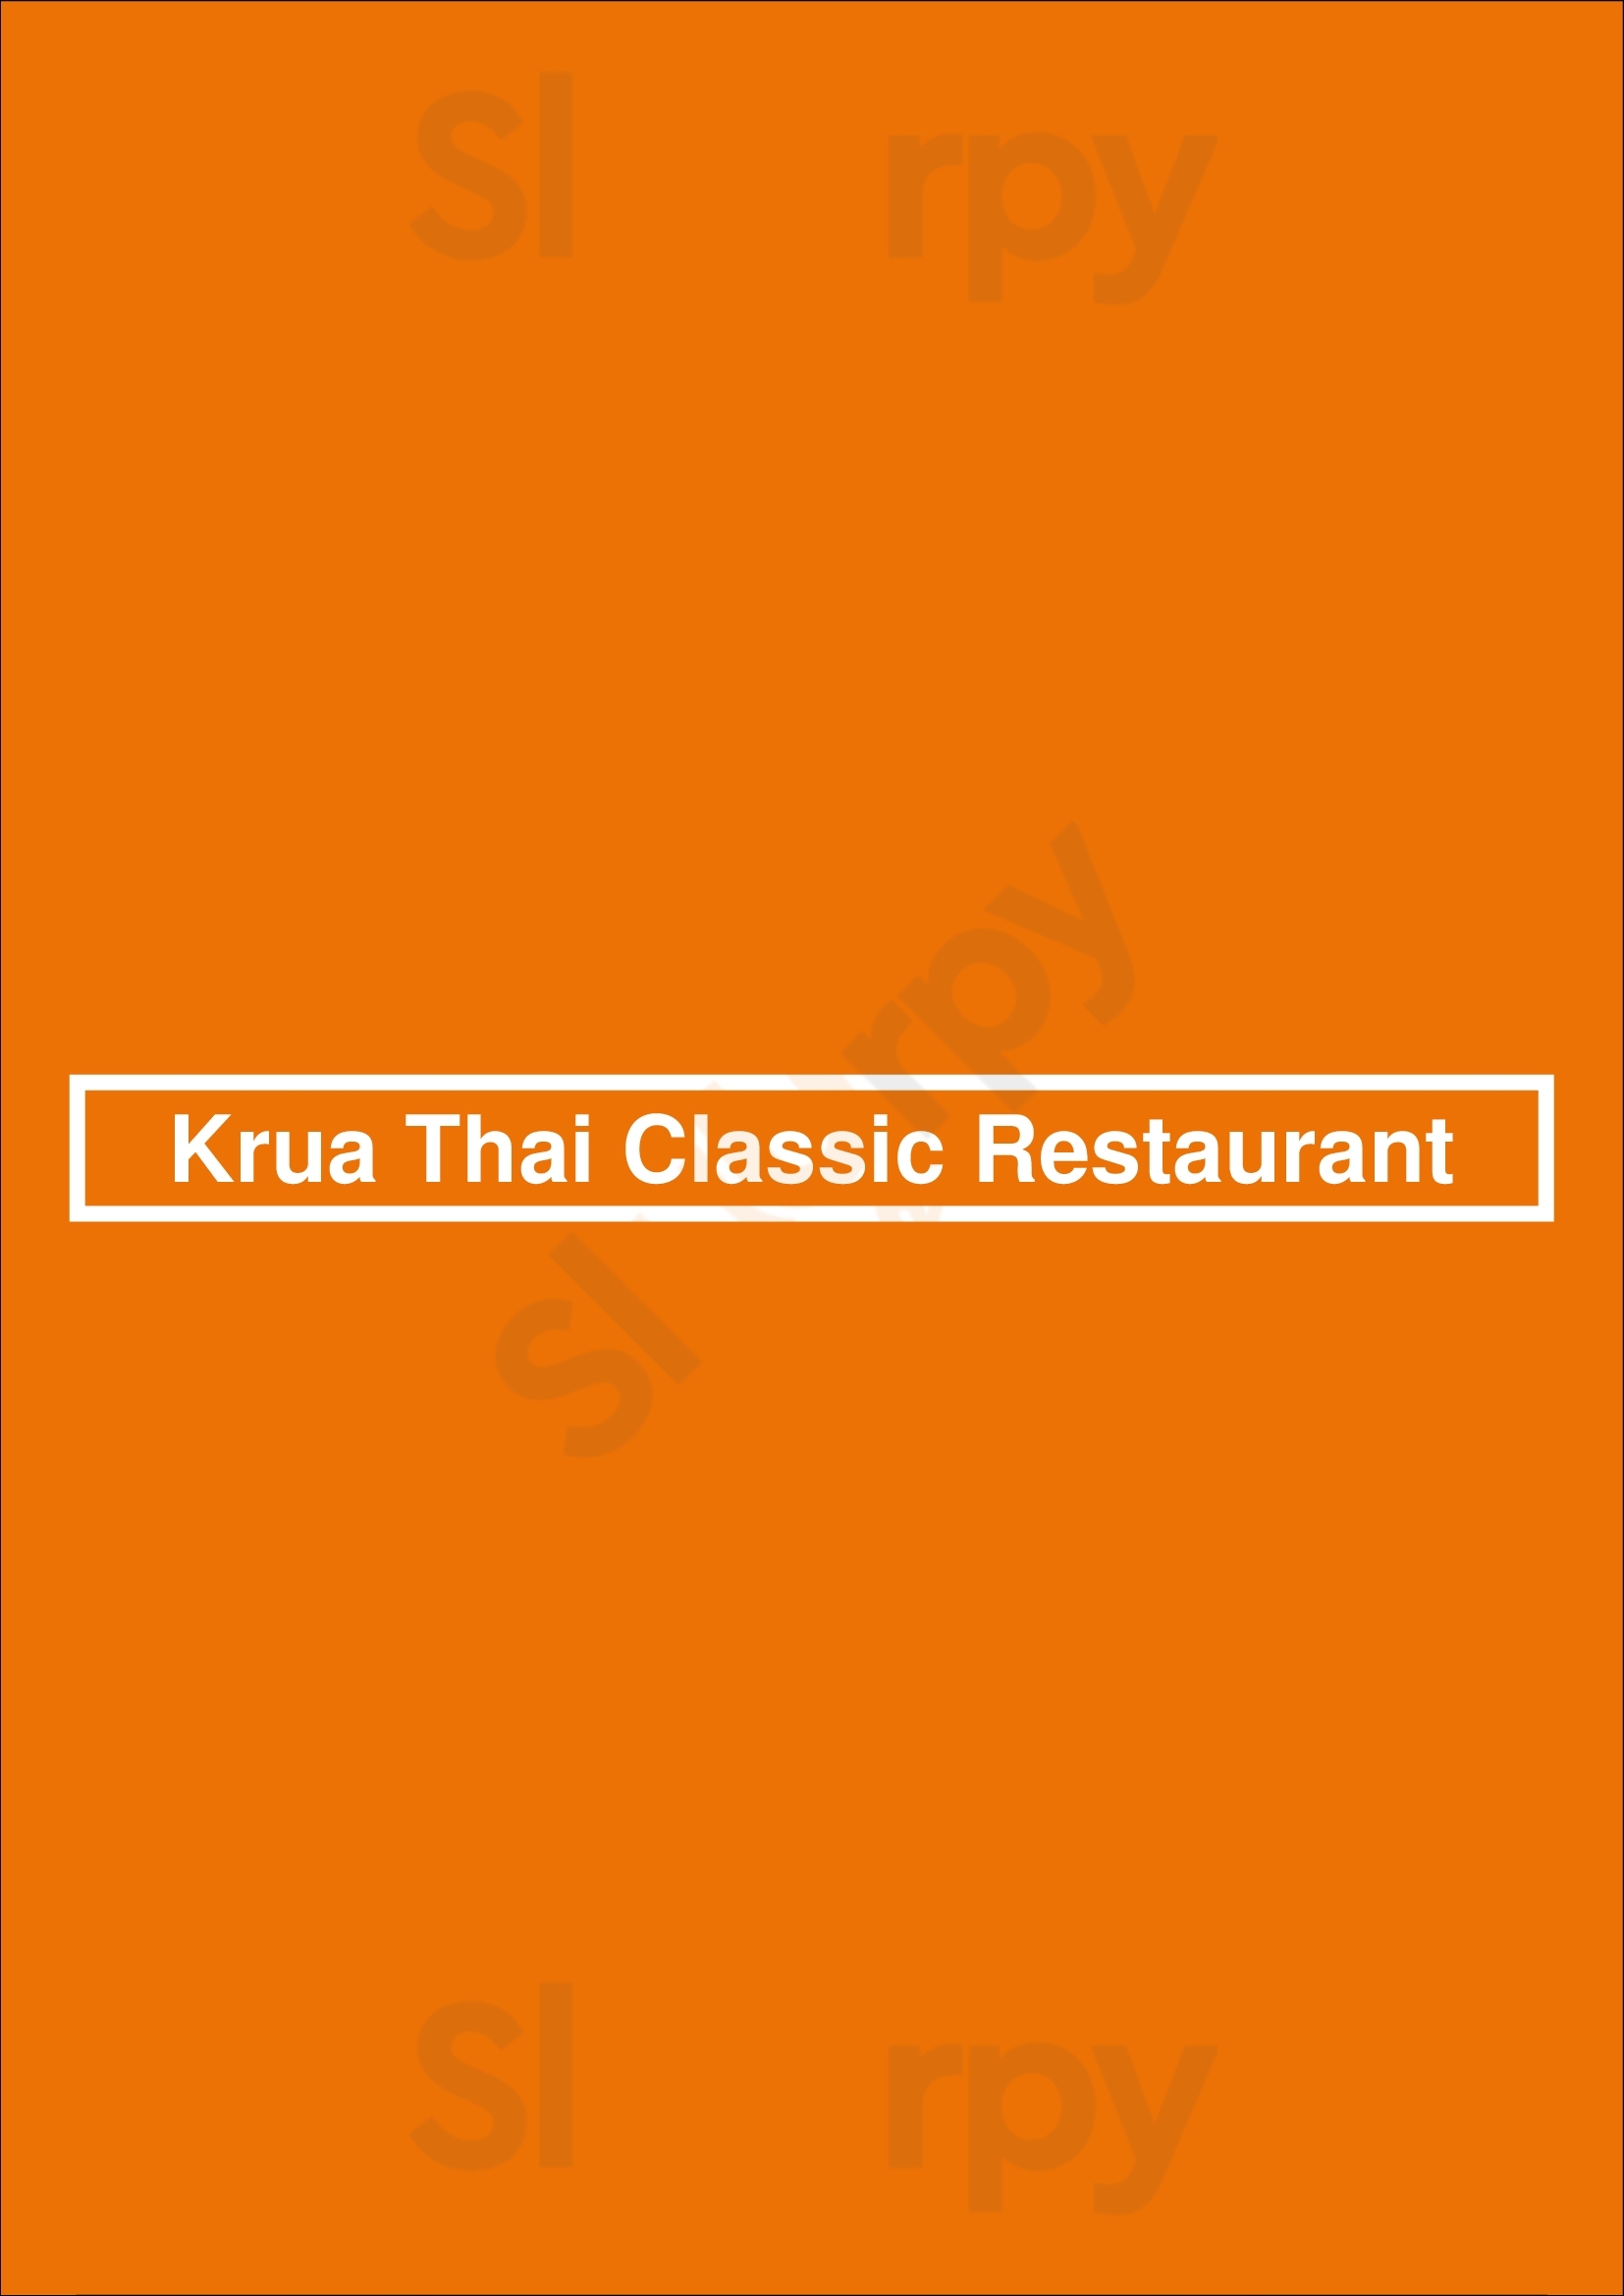 Krua Thai Classic Restaurant Amsterdam Menu - 1